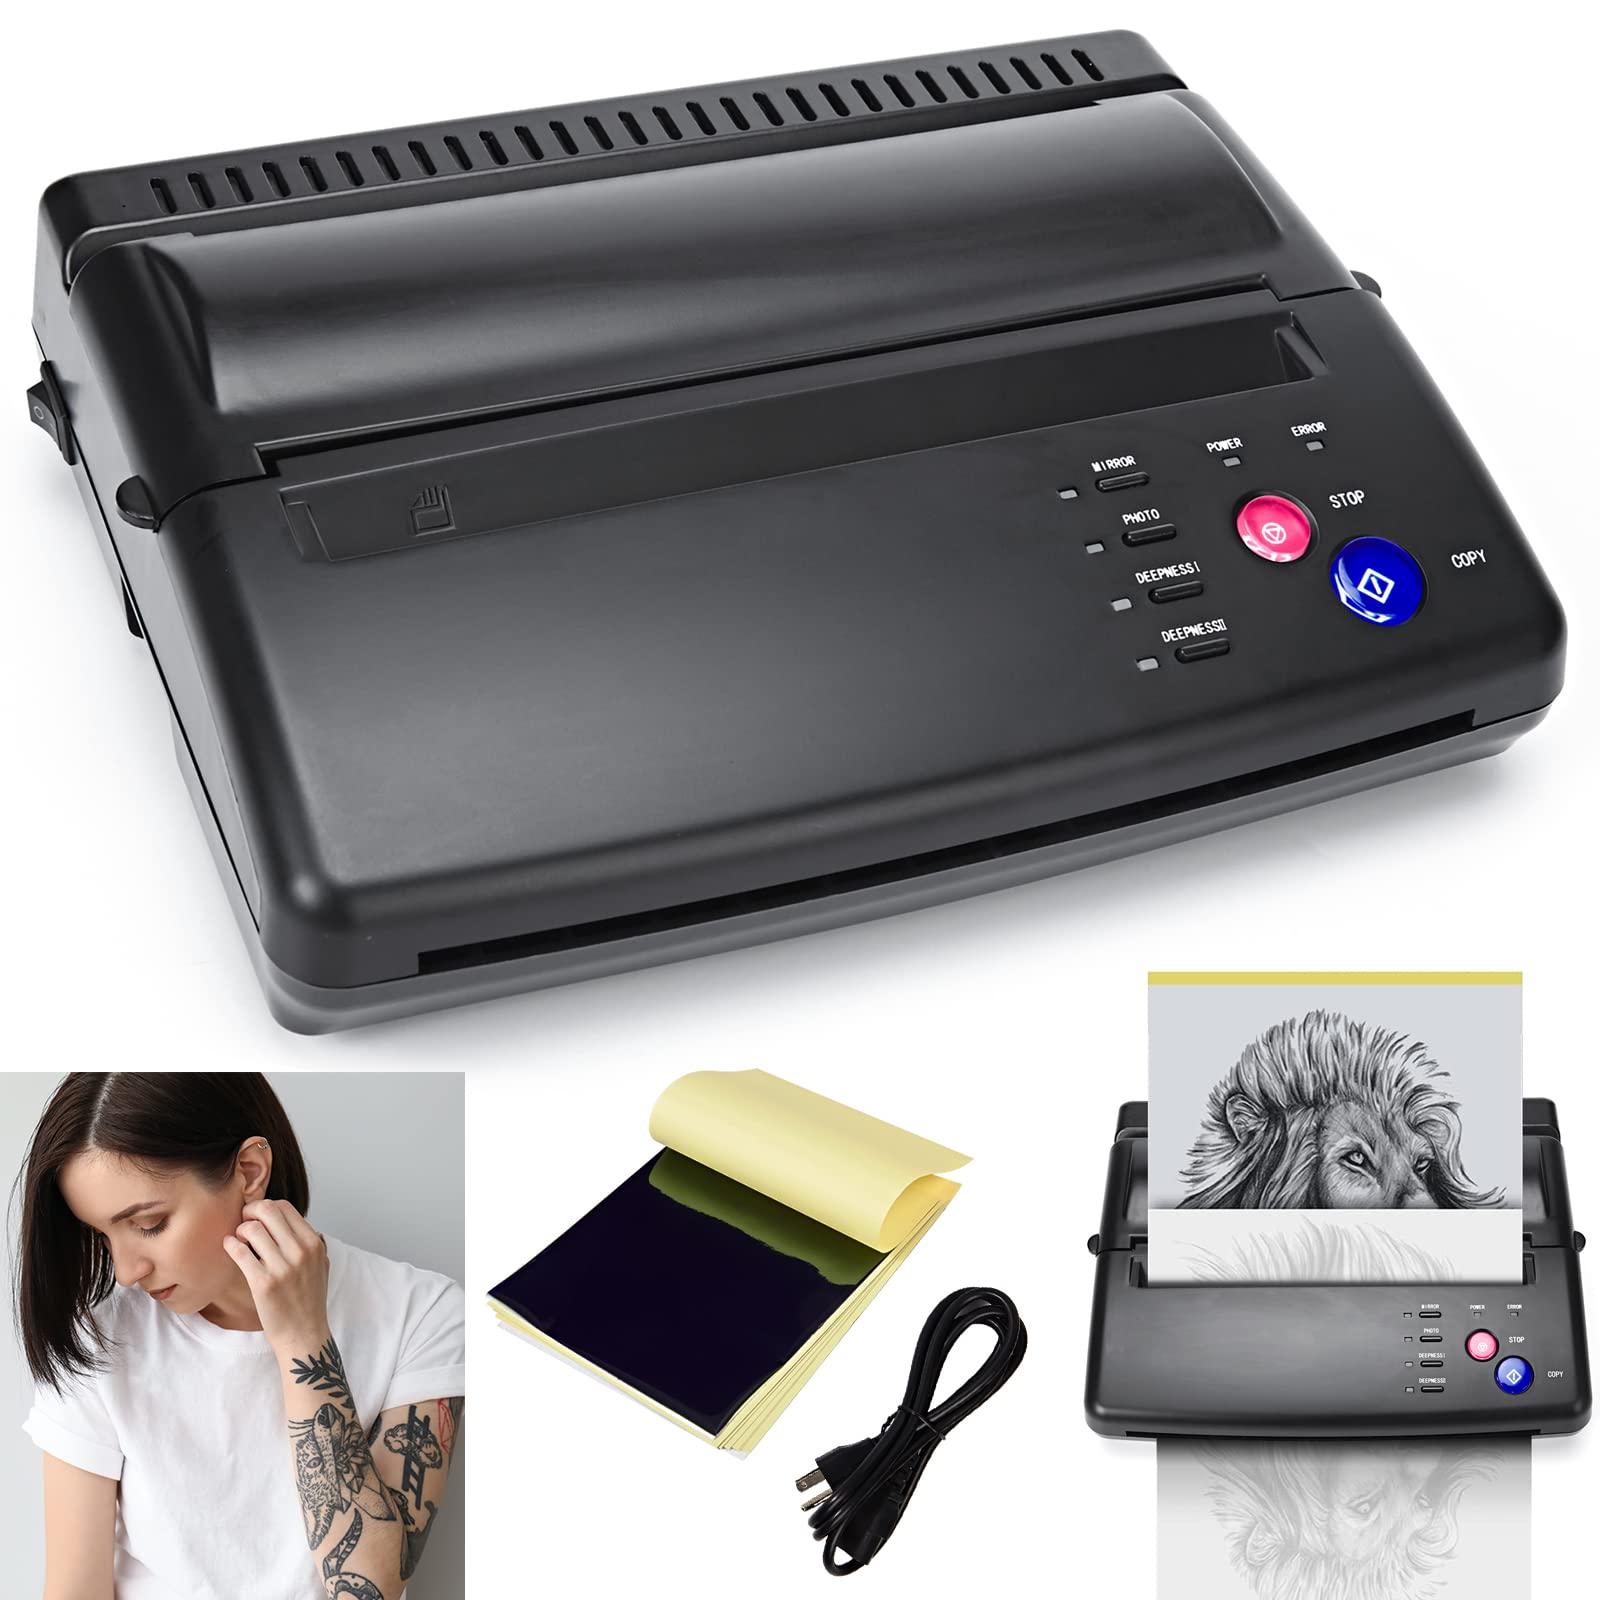 mht-p8008 bluetoothportable tattoo printer machine tattoo| Alibaba.com